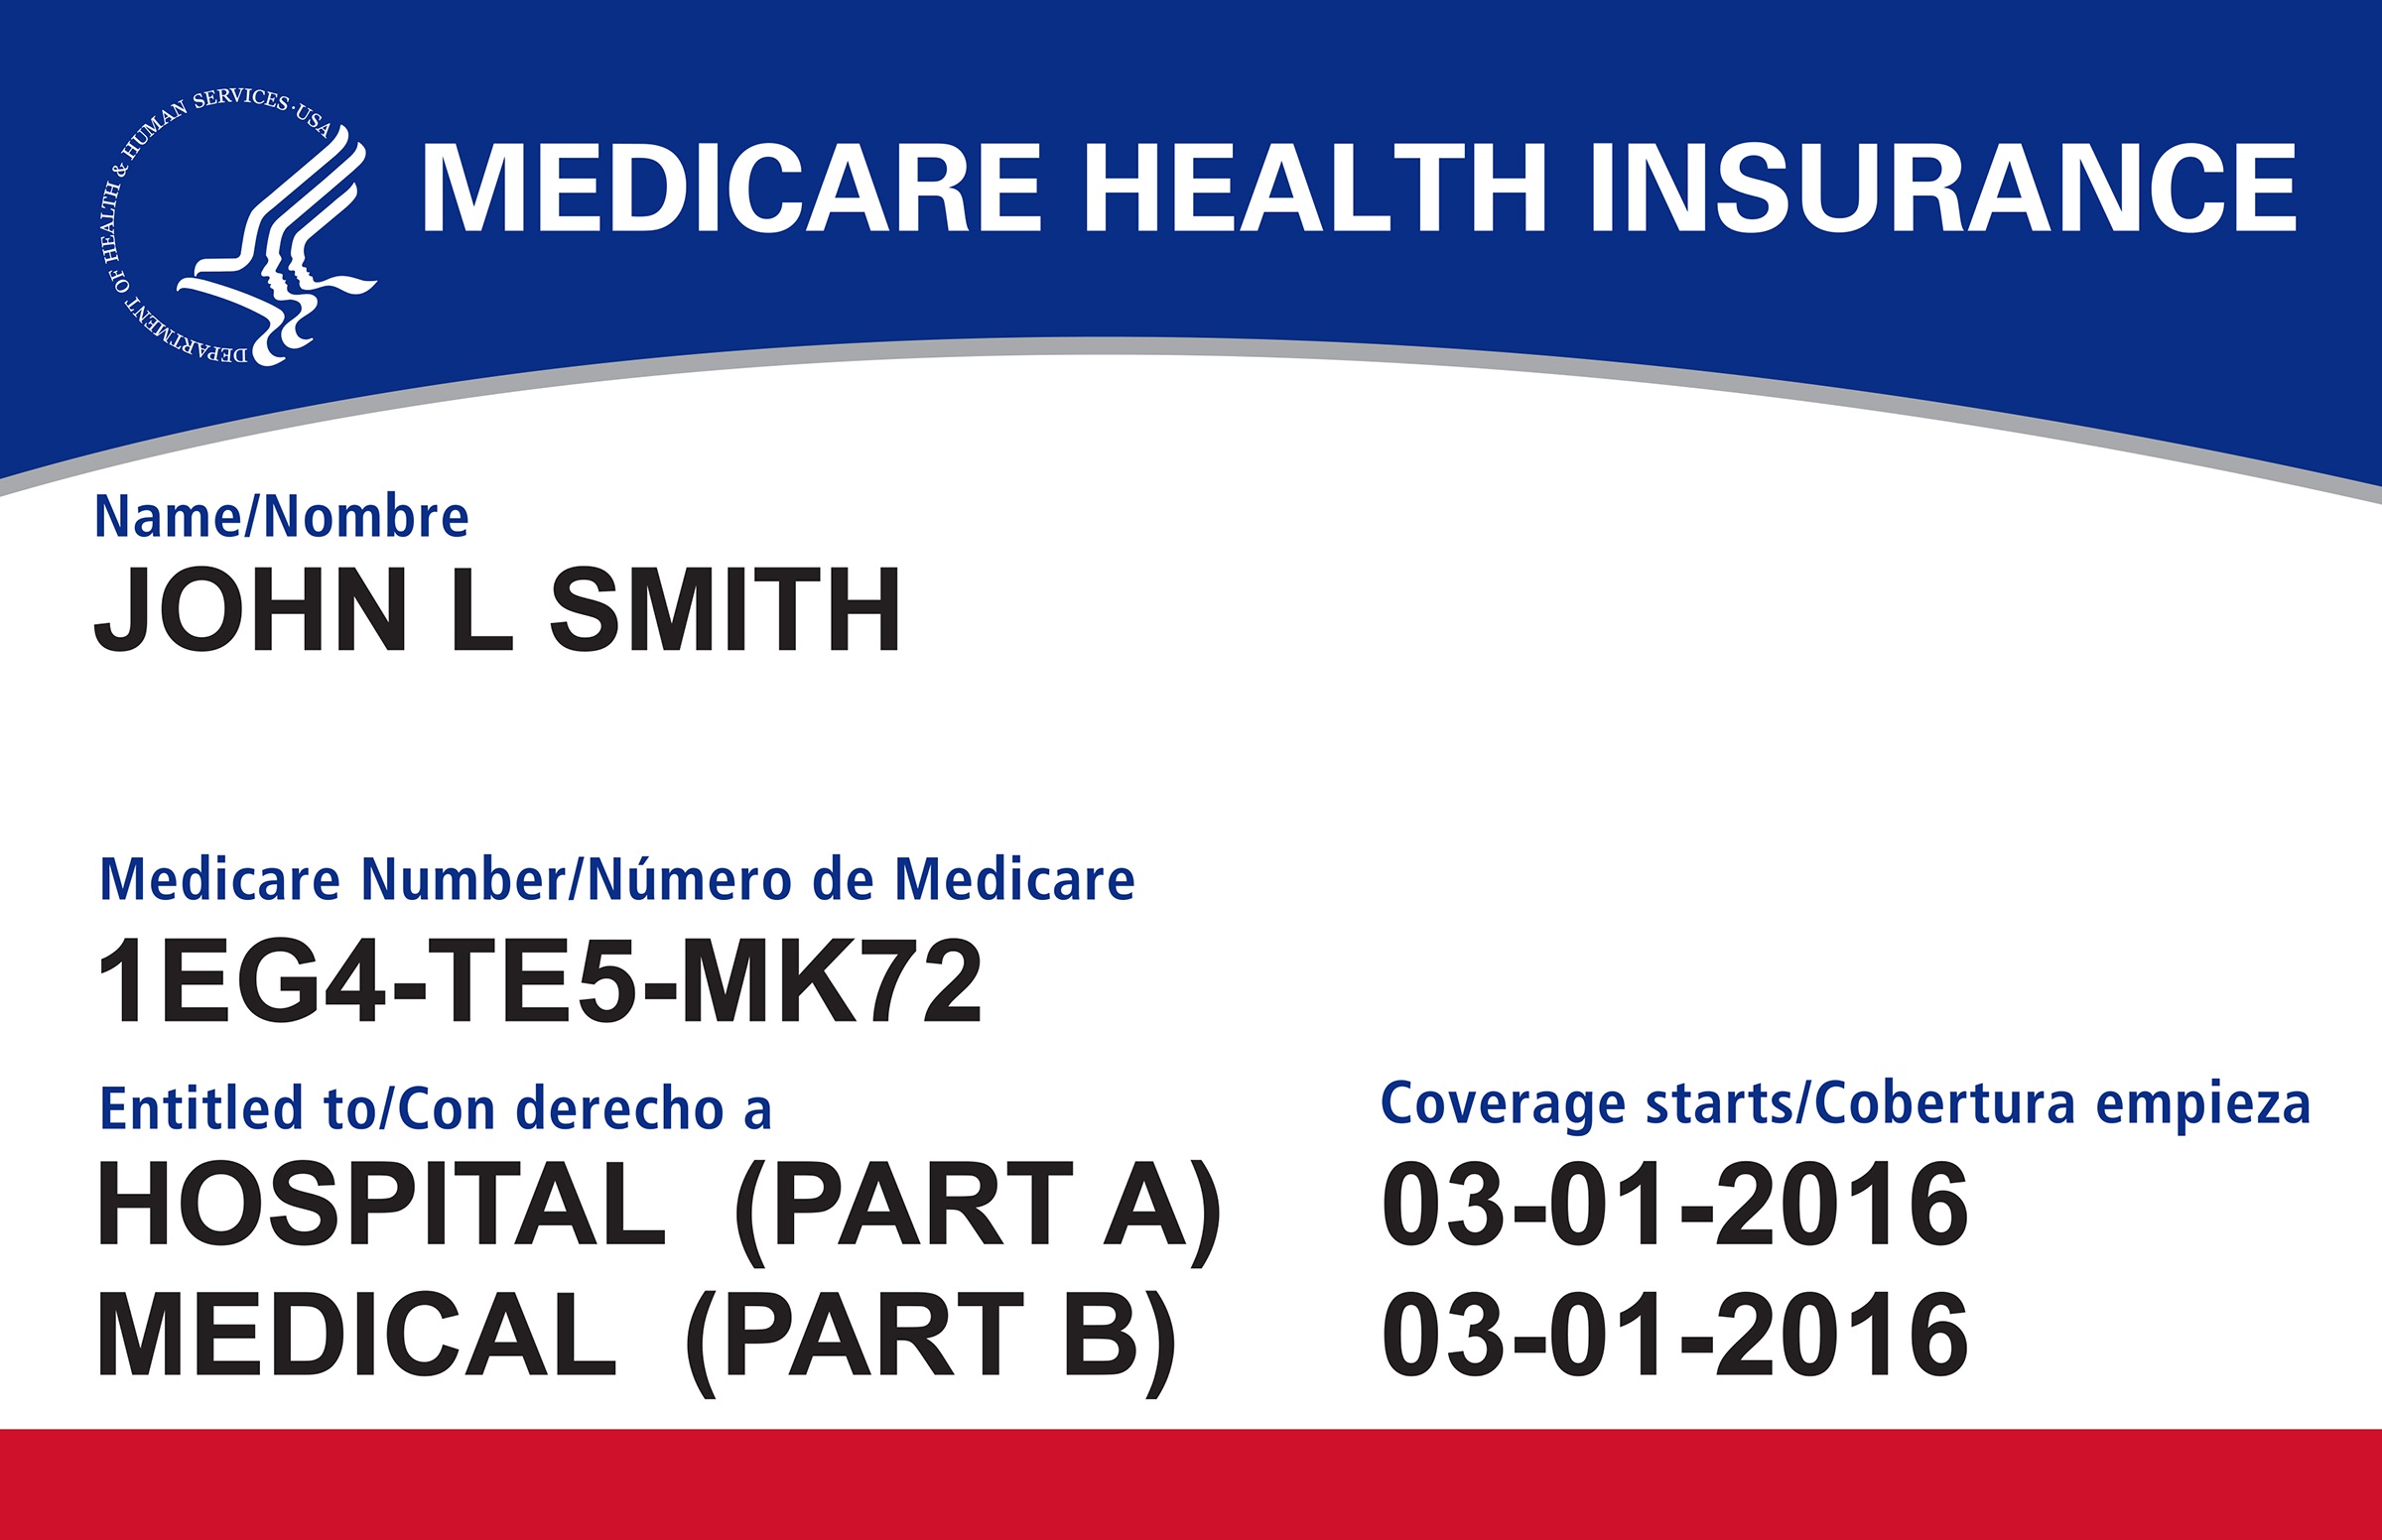 Medicare Health Insurance card